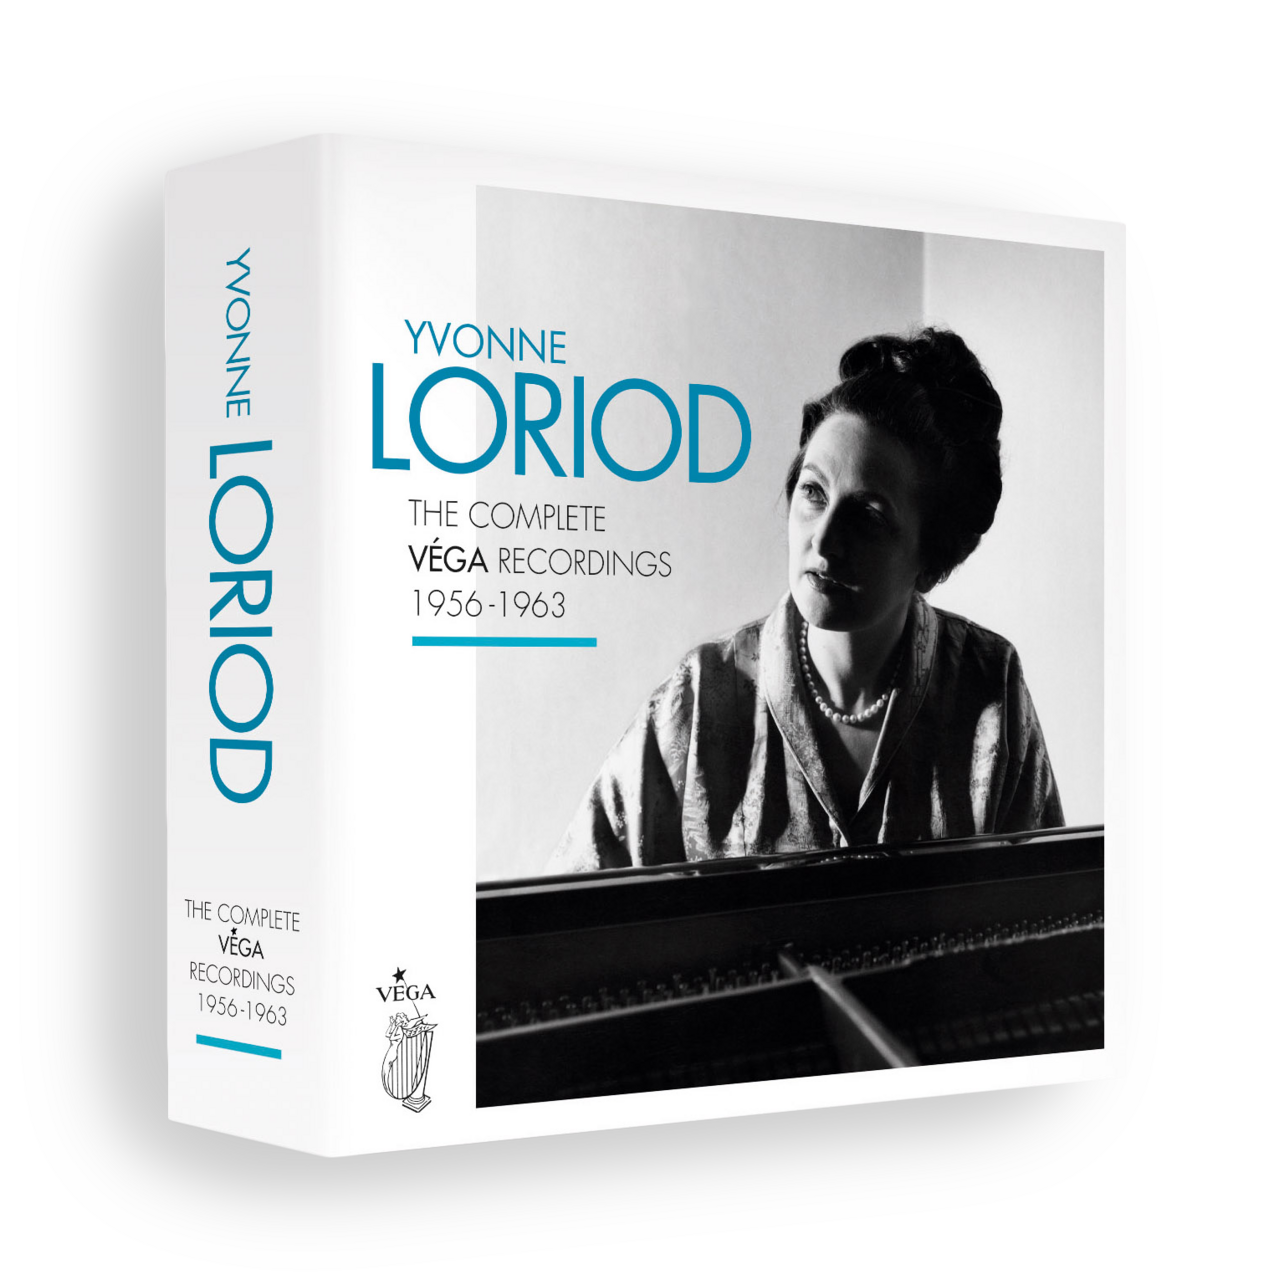 Yvonne Loriod - The Complete Vega Recordings (Reissue): 13CD Box Set